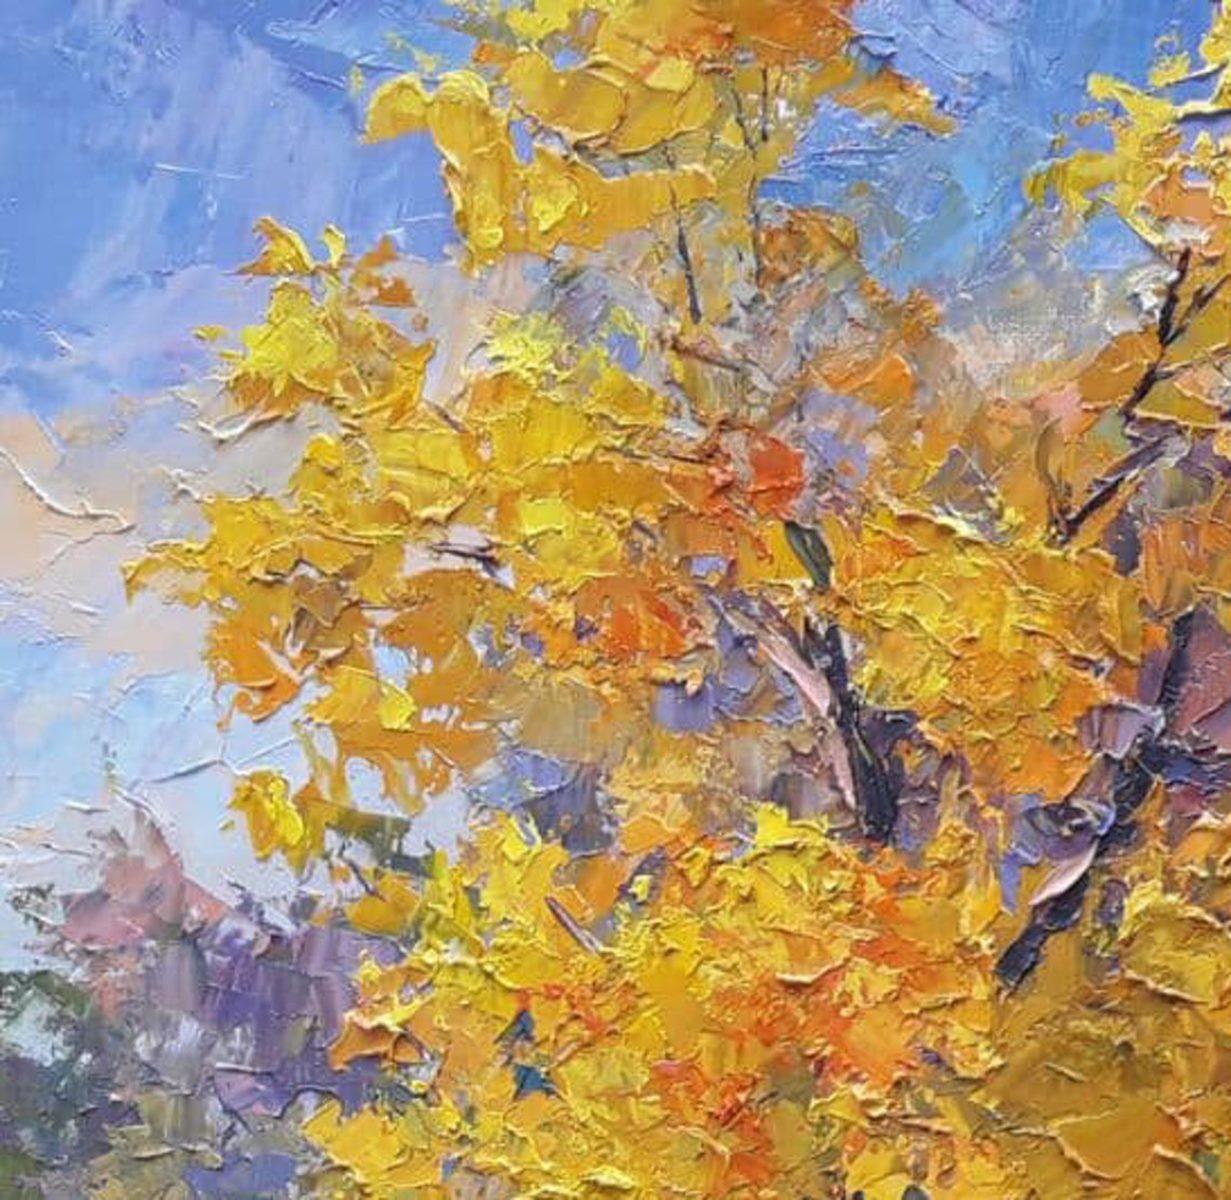 Artist: Boris Serdyuk 
Work: Original oil painting, handmade artwork, one of a kind 
Medium: Oil on Canvas
Style: Impressionism
Year: 2020
Title: Autumn colors
Size: 19.5